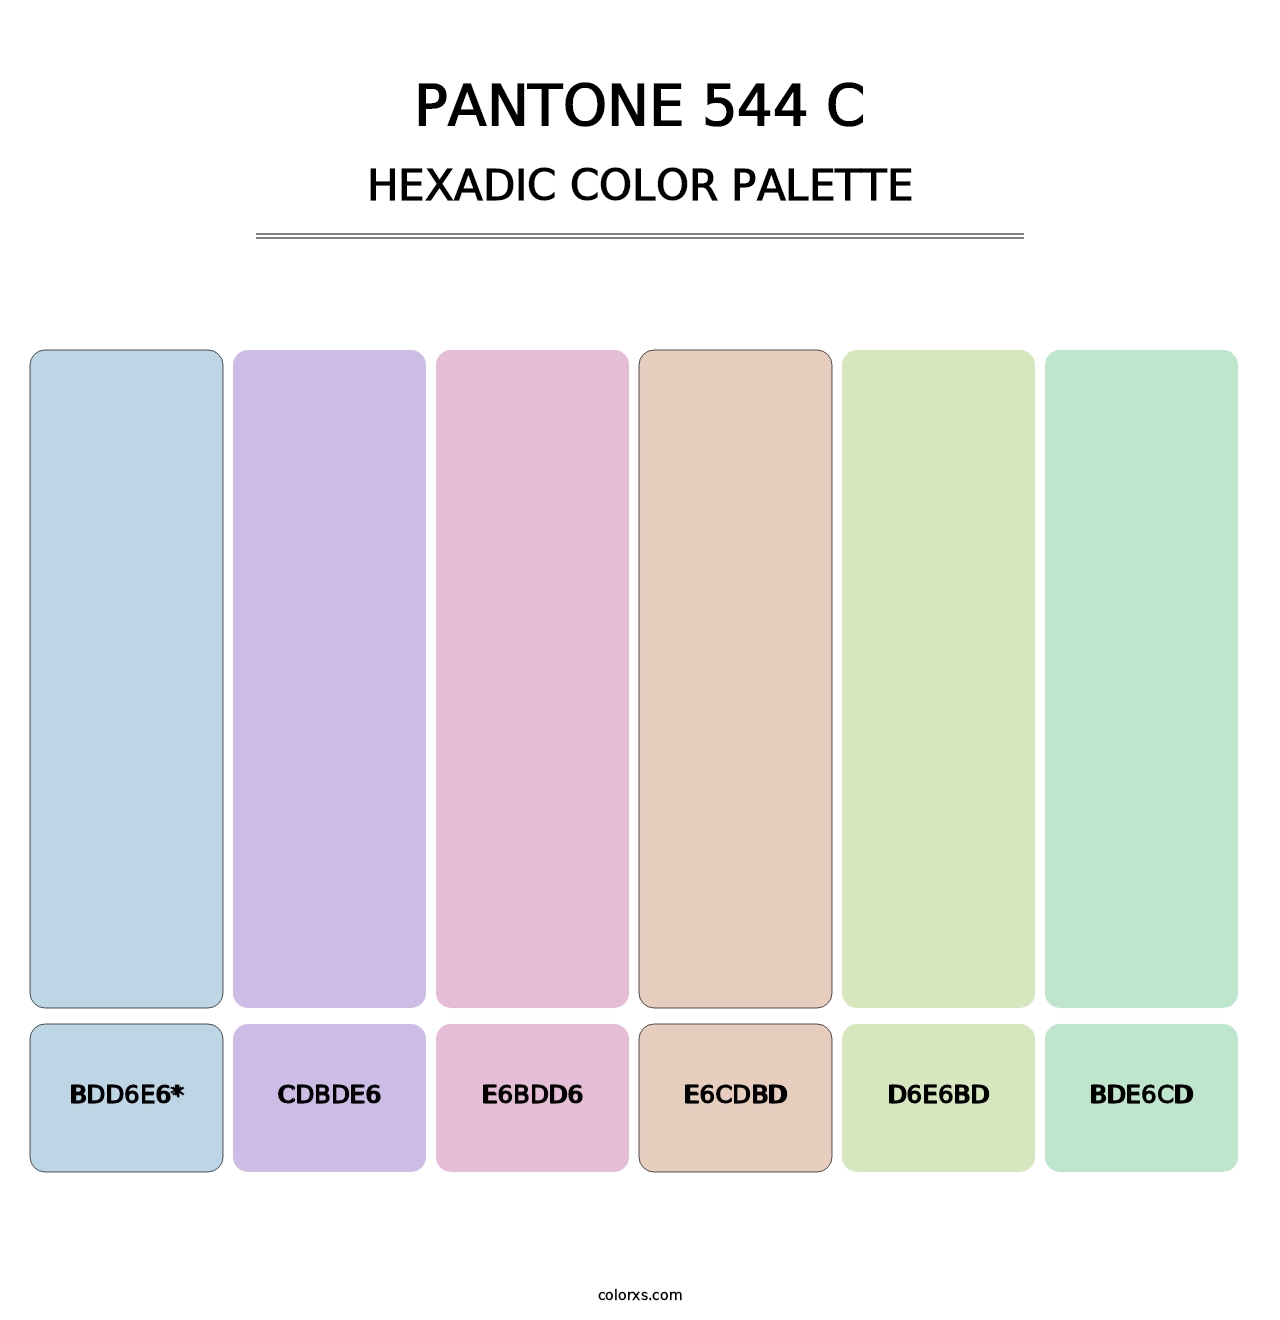 PANTONE 544 C - Hexadic Color Palette